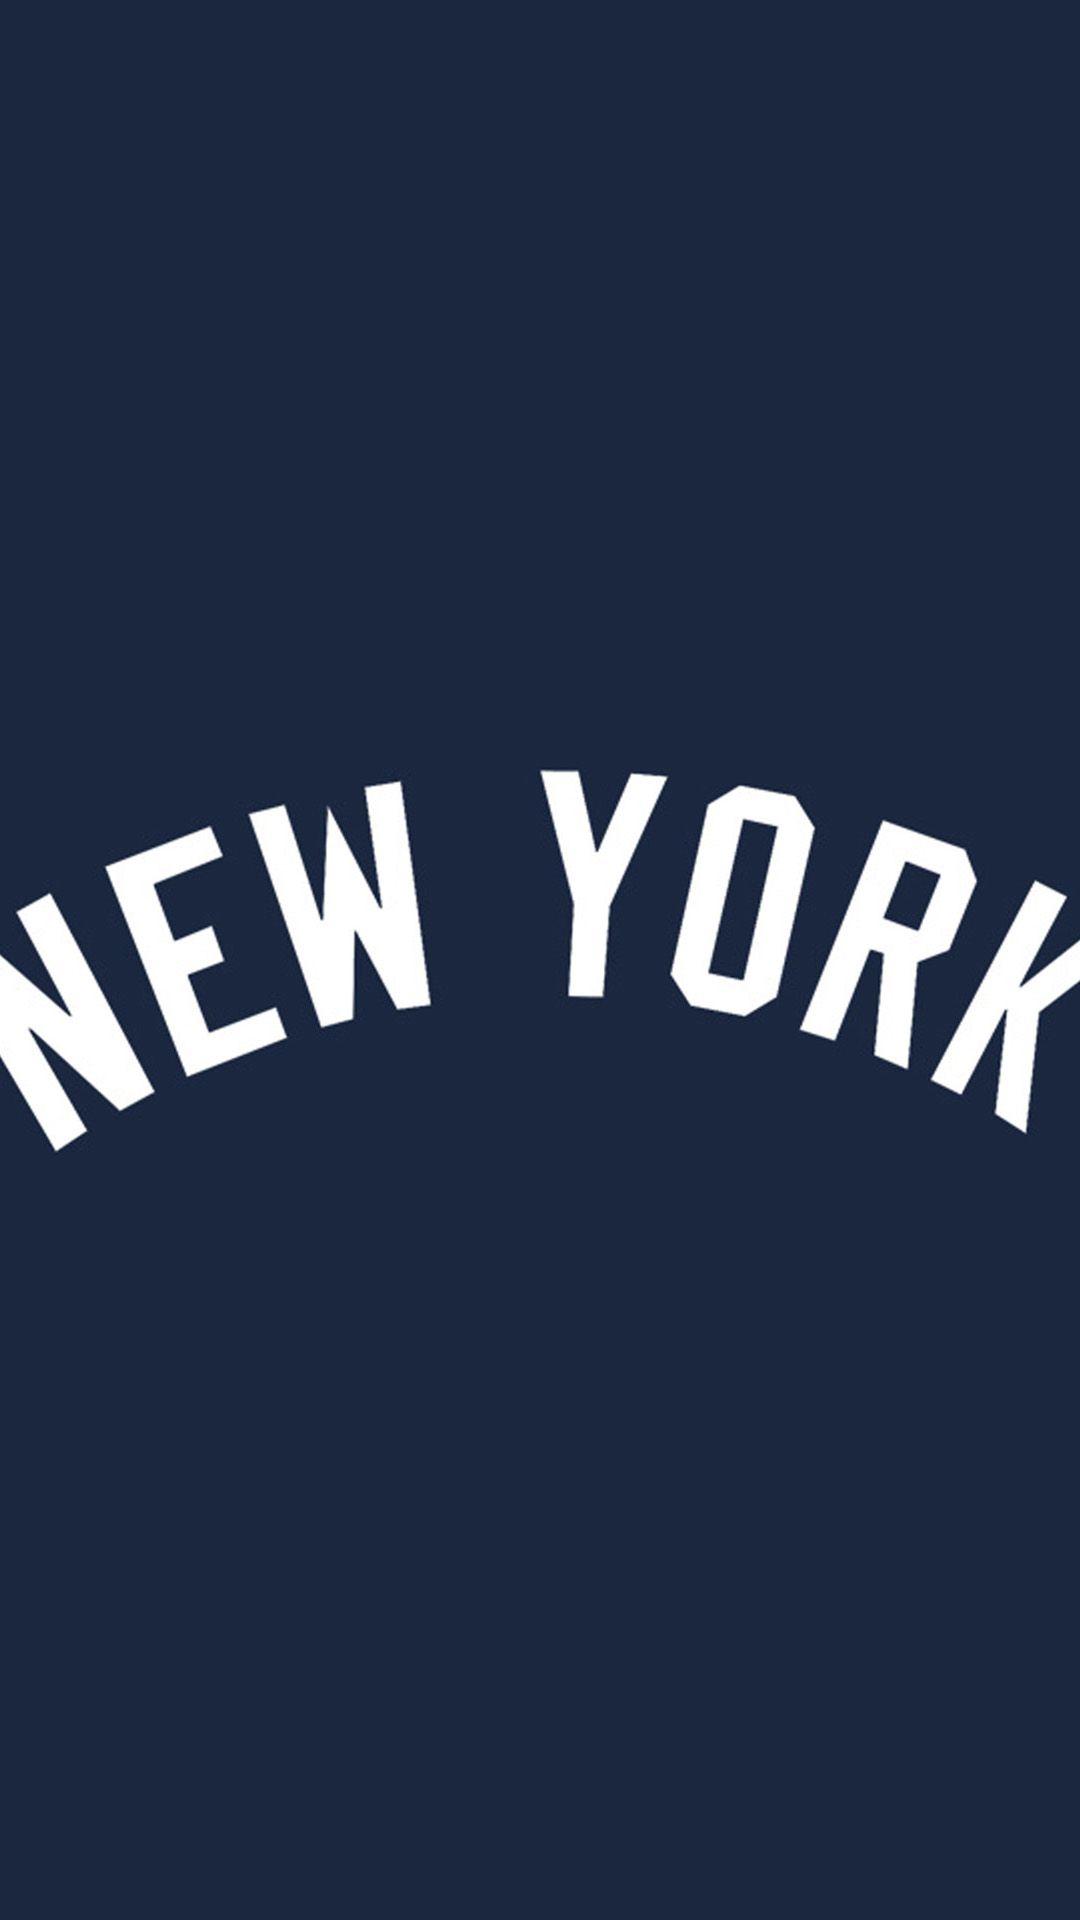 Wallpaper ID 375878  Sports New York Yankees Phone Wallpaper Logo MLB  Baseball 1080x2160 free download